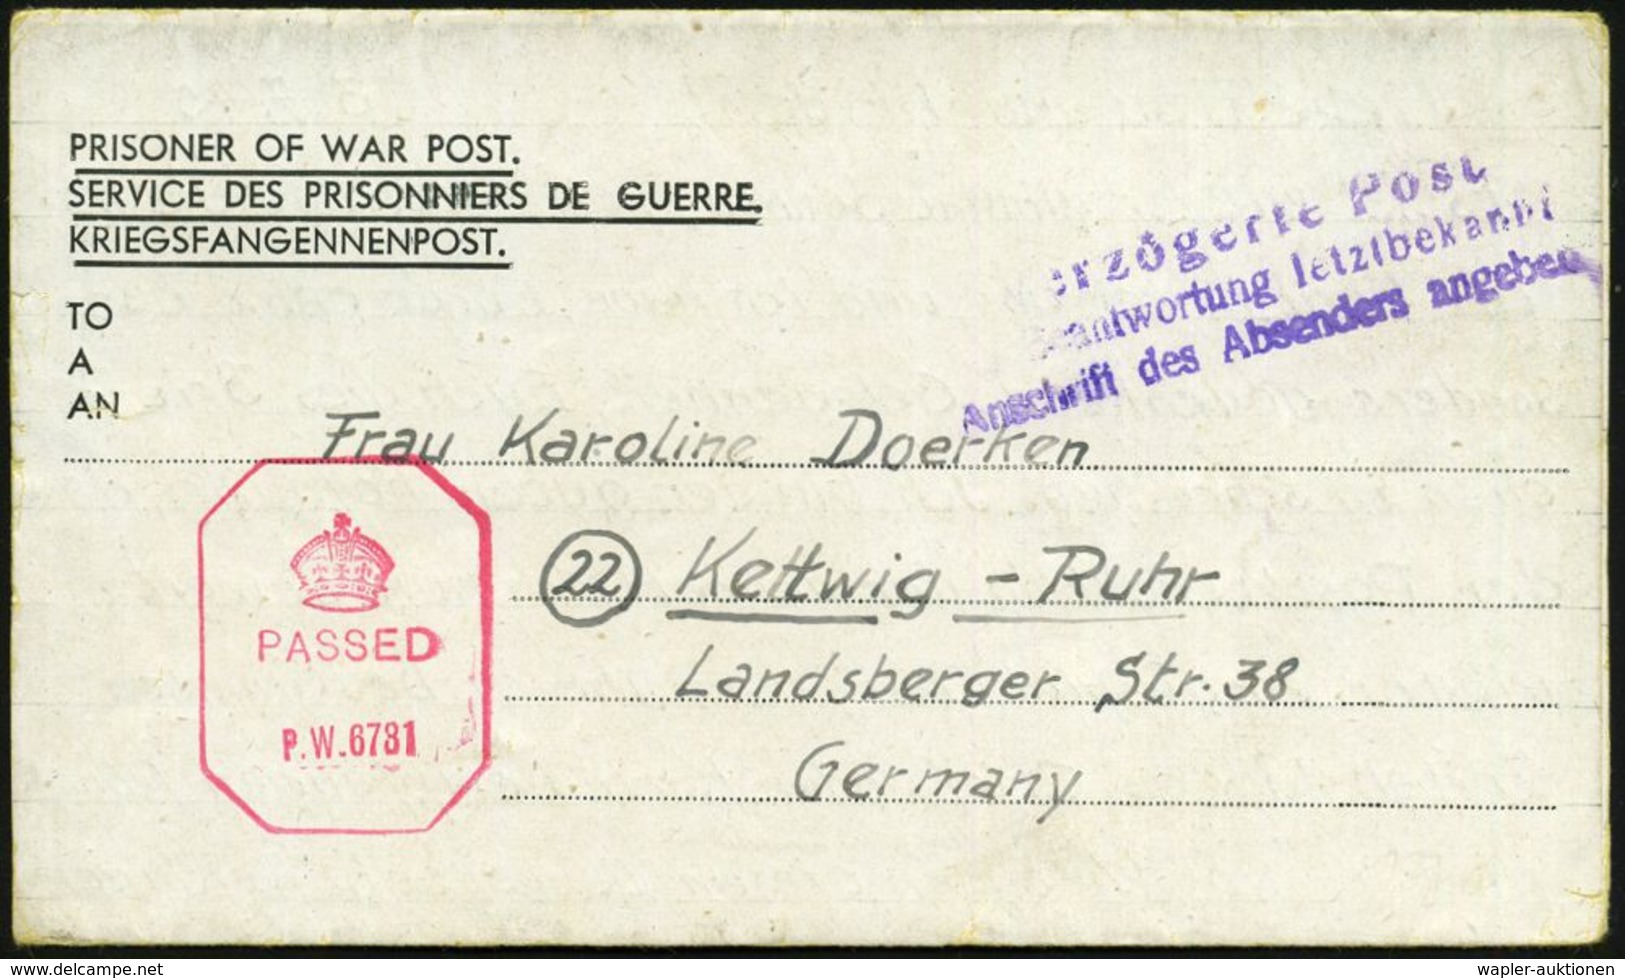 KGF-POST NACH DEM II. WELTKRIEG : GROSSBRITANNIEN 1945 (3.7.) Kgf.-Faltbf. (dreisprachig) ,viol. 3L: Verzögerte Post/Bea - Croce Rossa